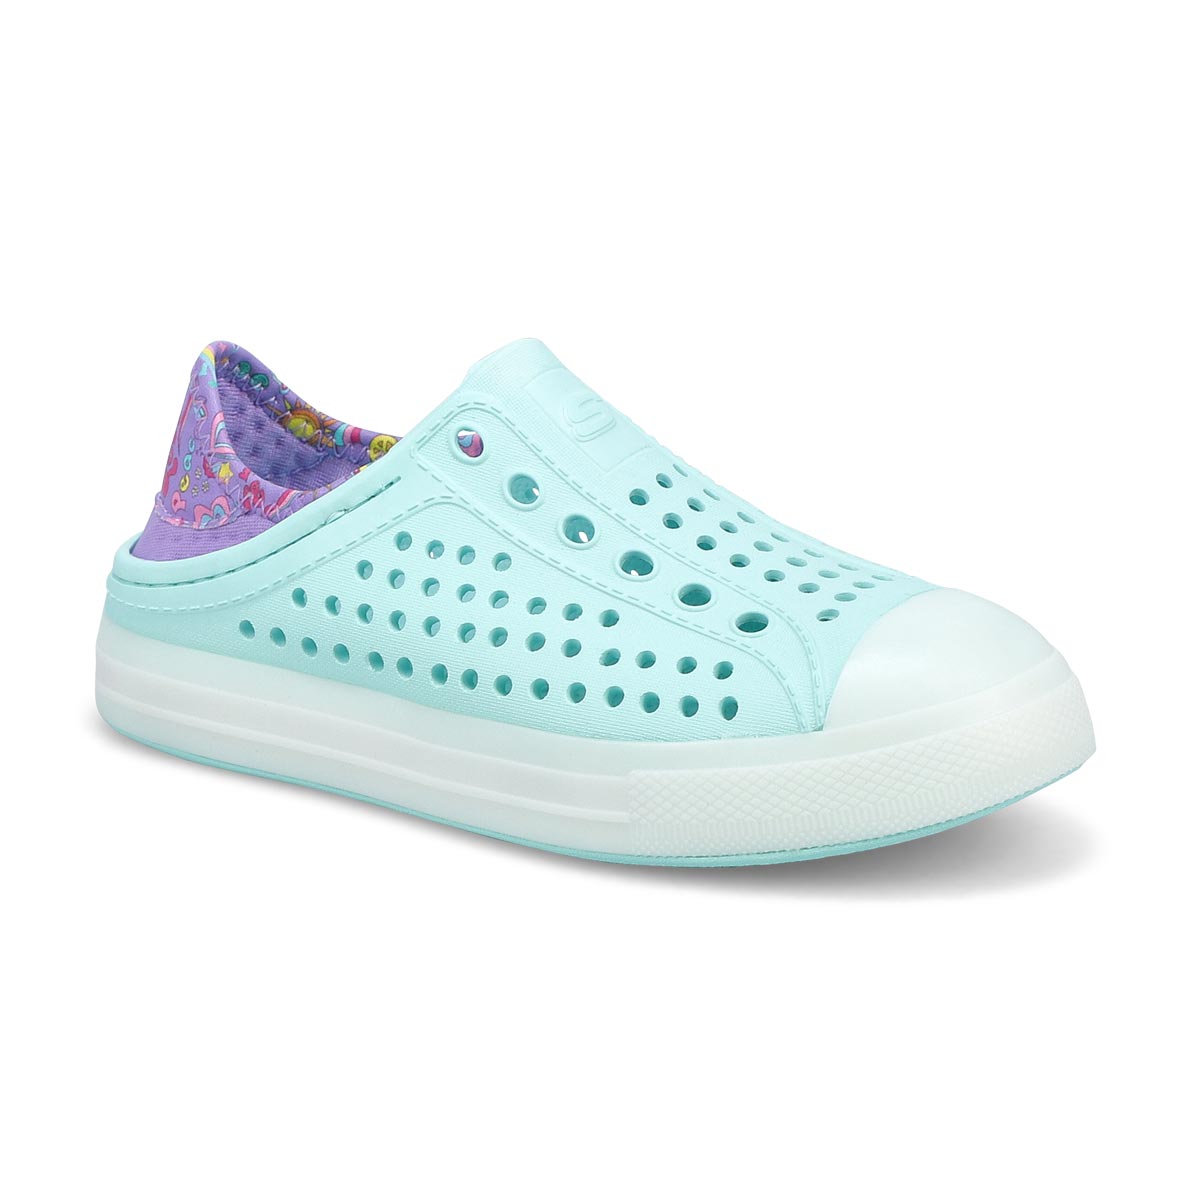 Girls' Guzman Flash Shoe - Turquoise/Lavender